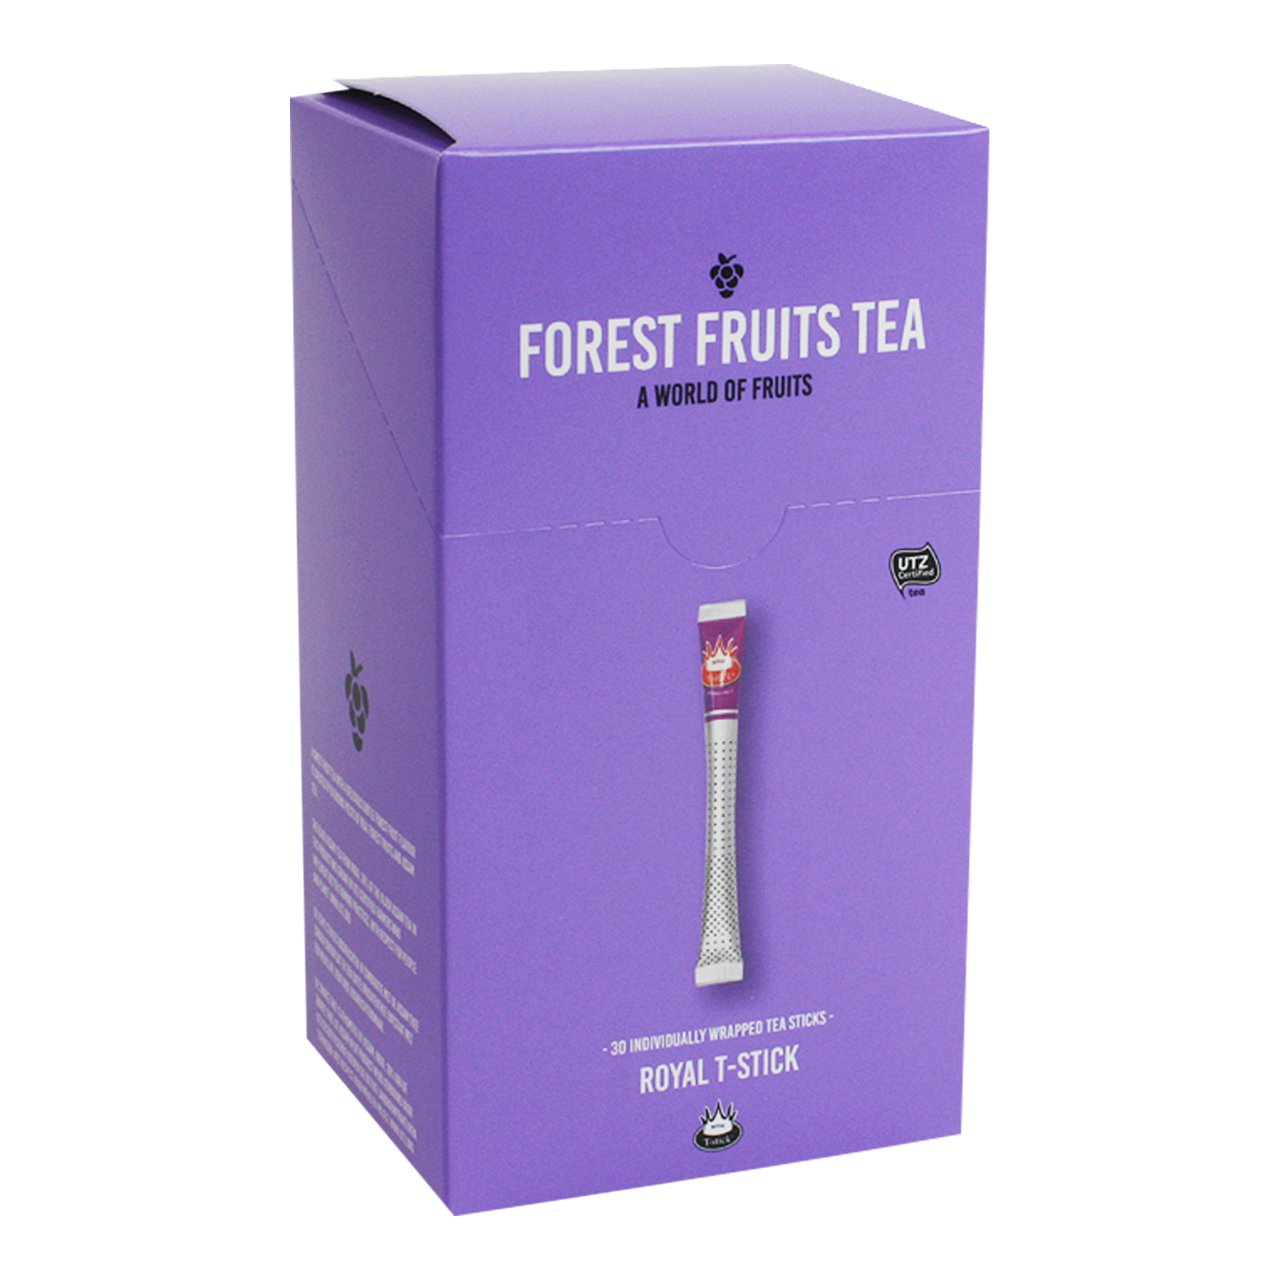 Forest fruits tea